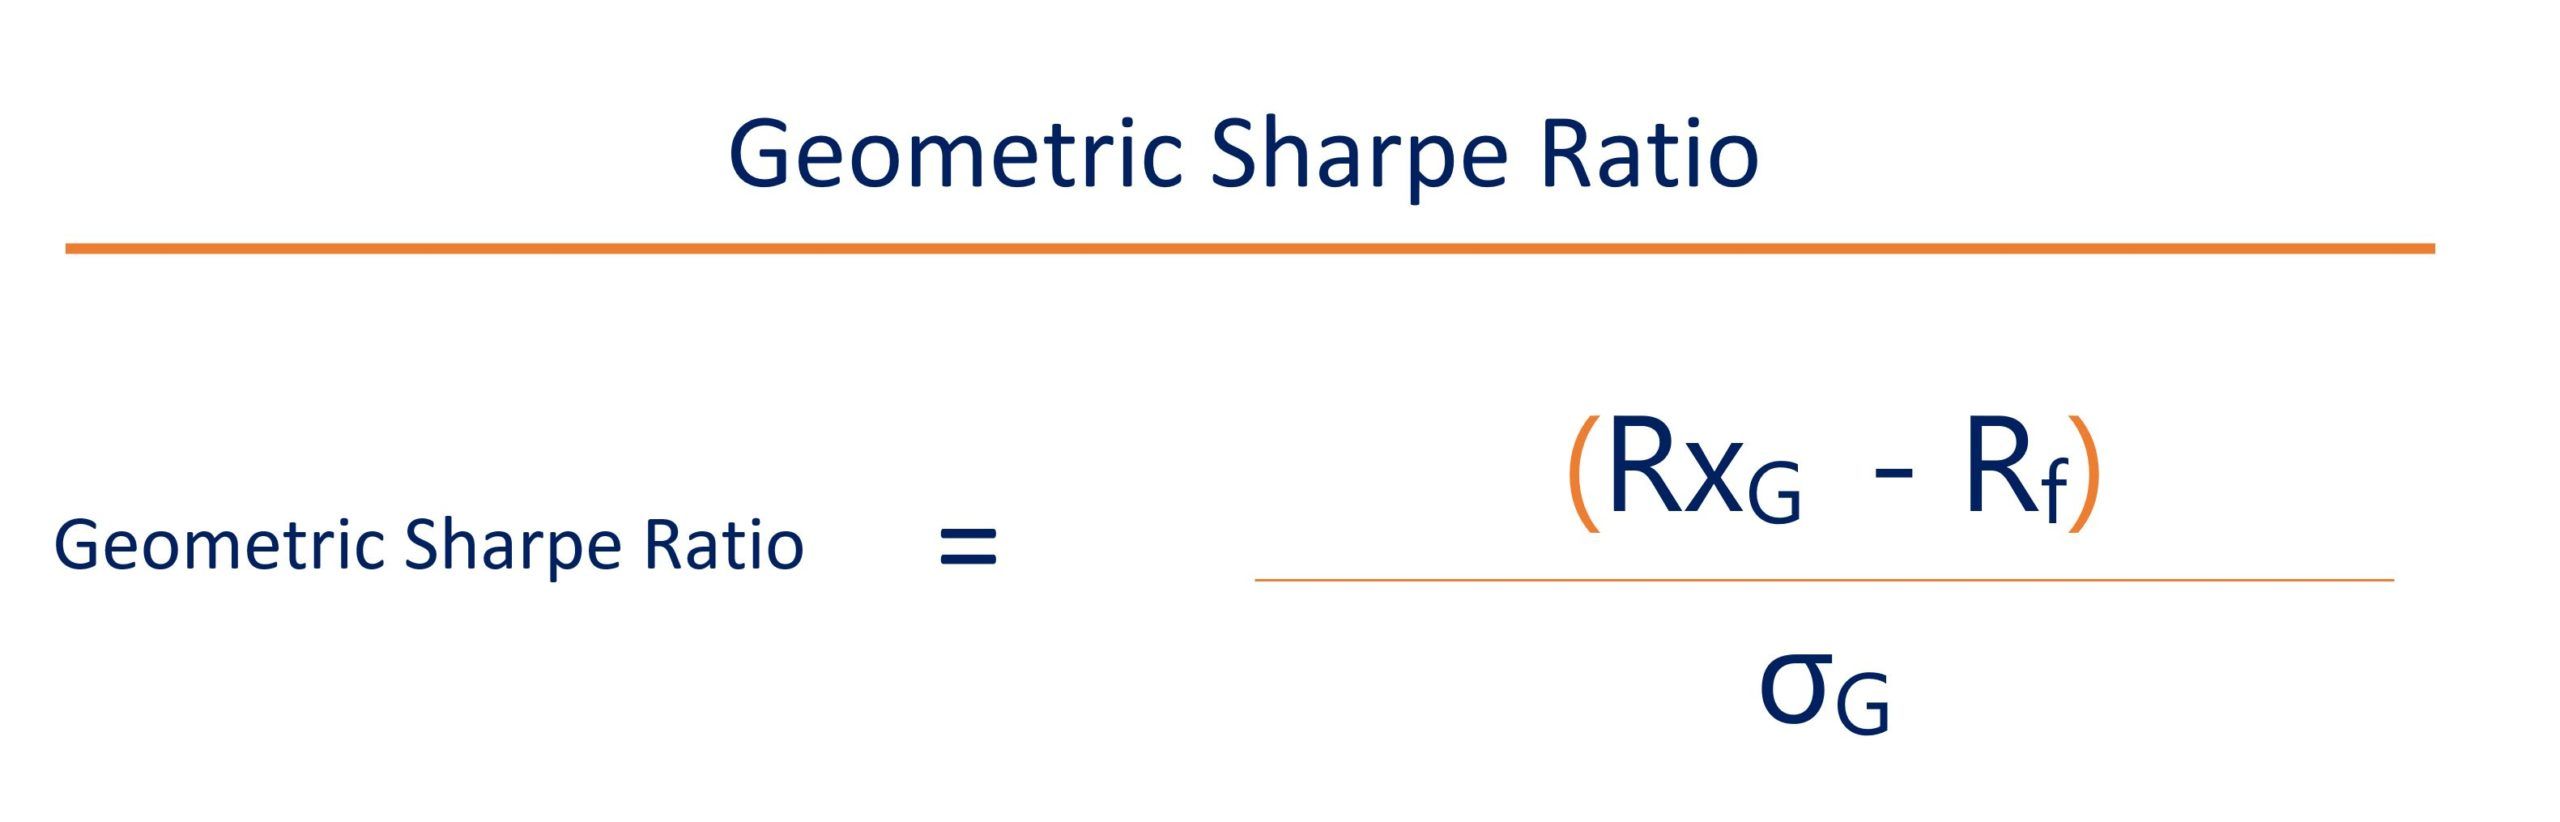 Geometric Sharpe Ratio Formula